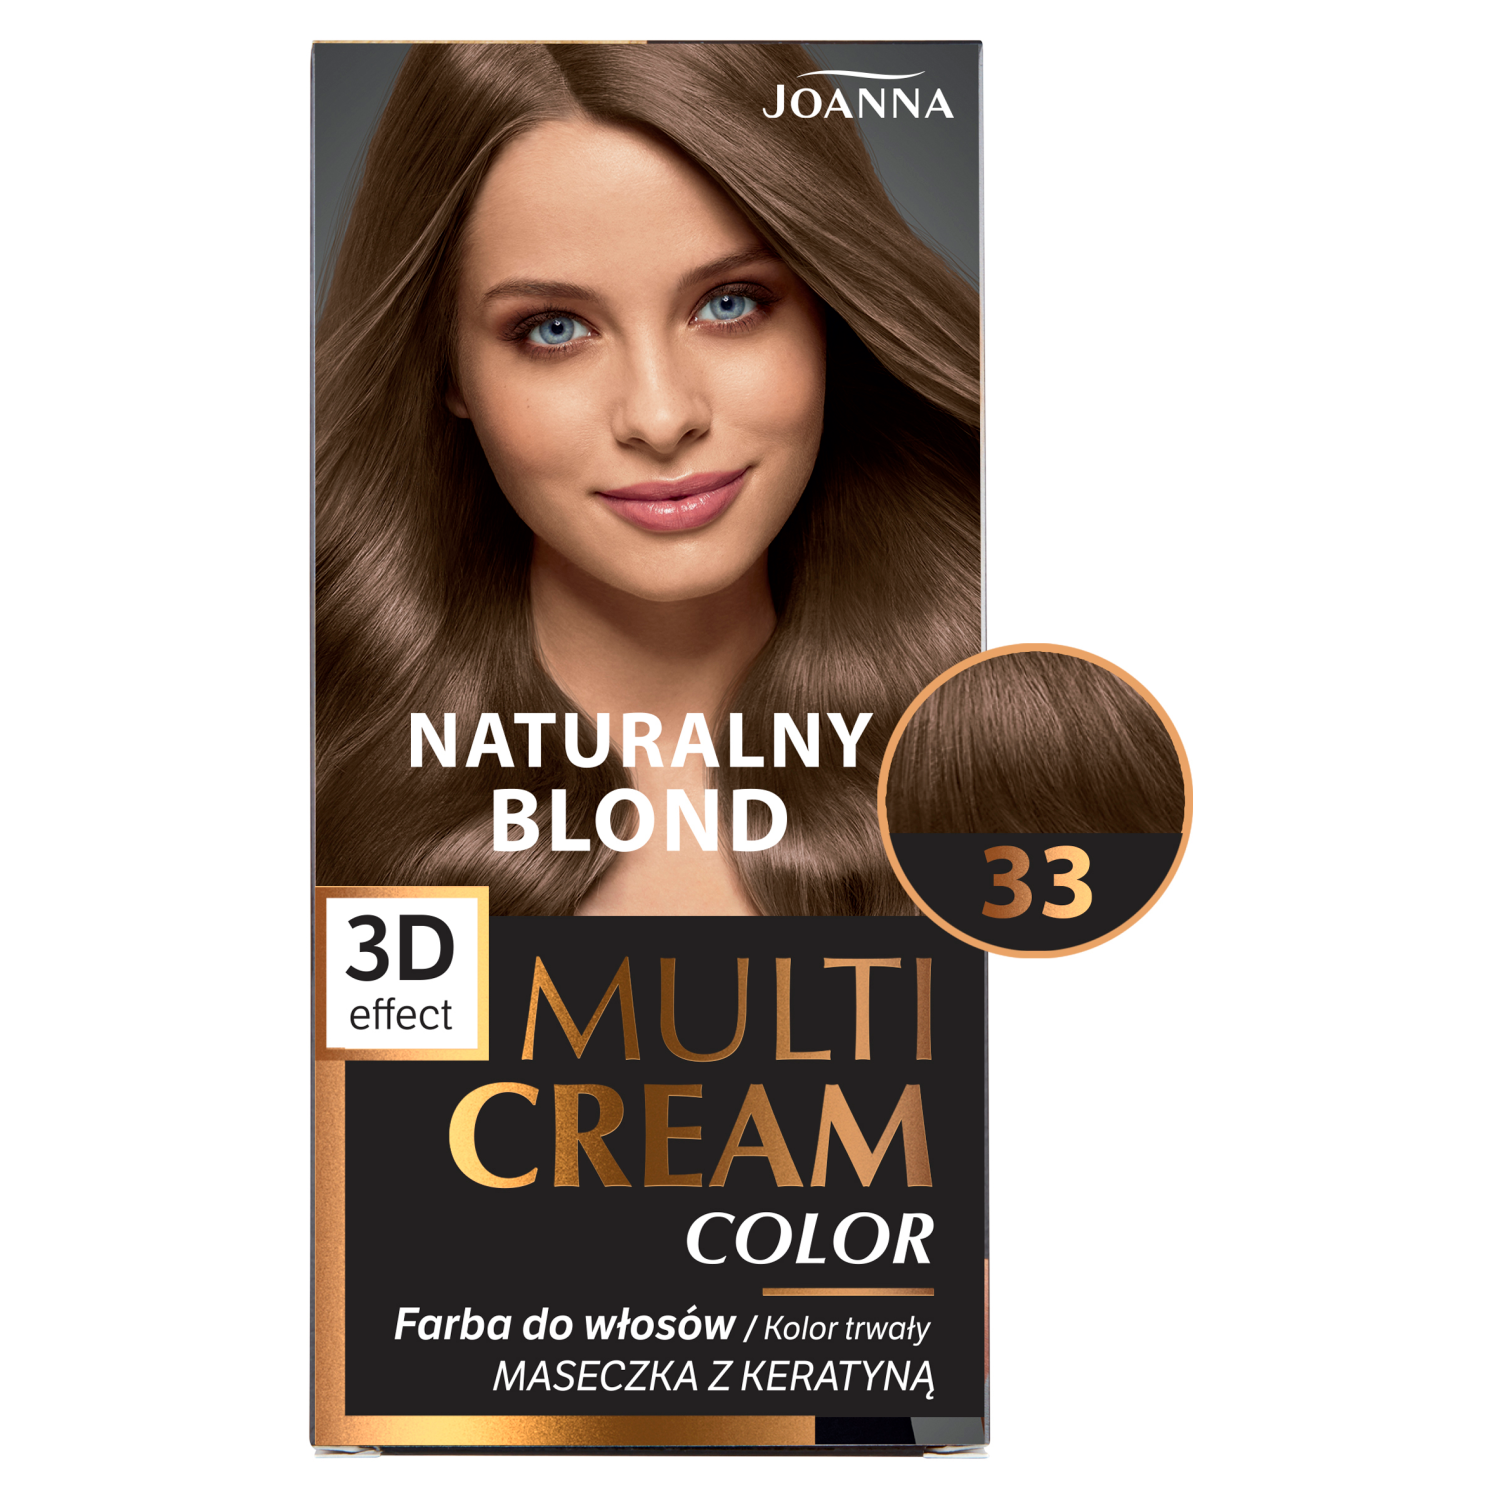 Joanna Multi Cream Color farba do włosów 33 naturalny blond, 1 opak. |  hebe.pl